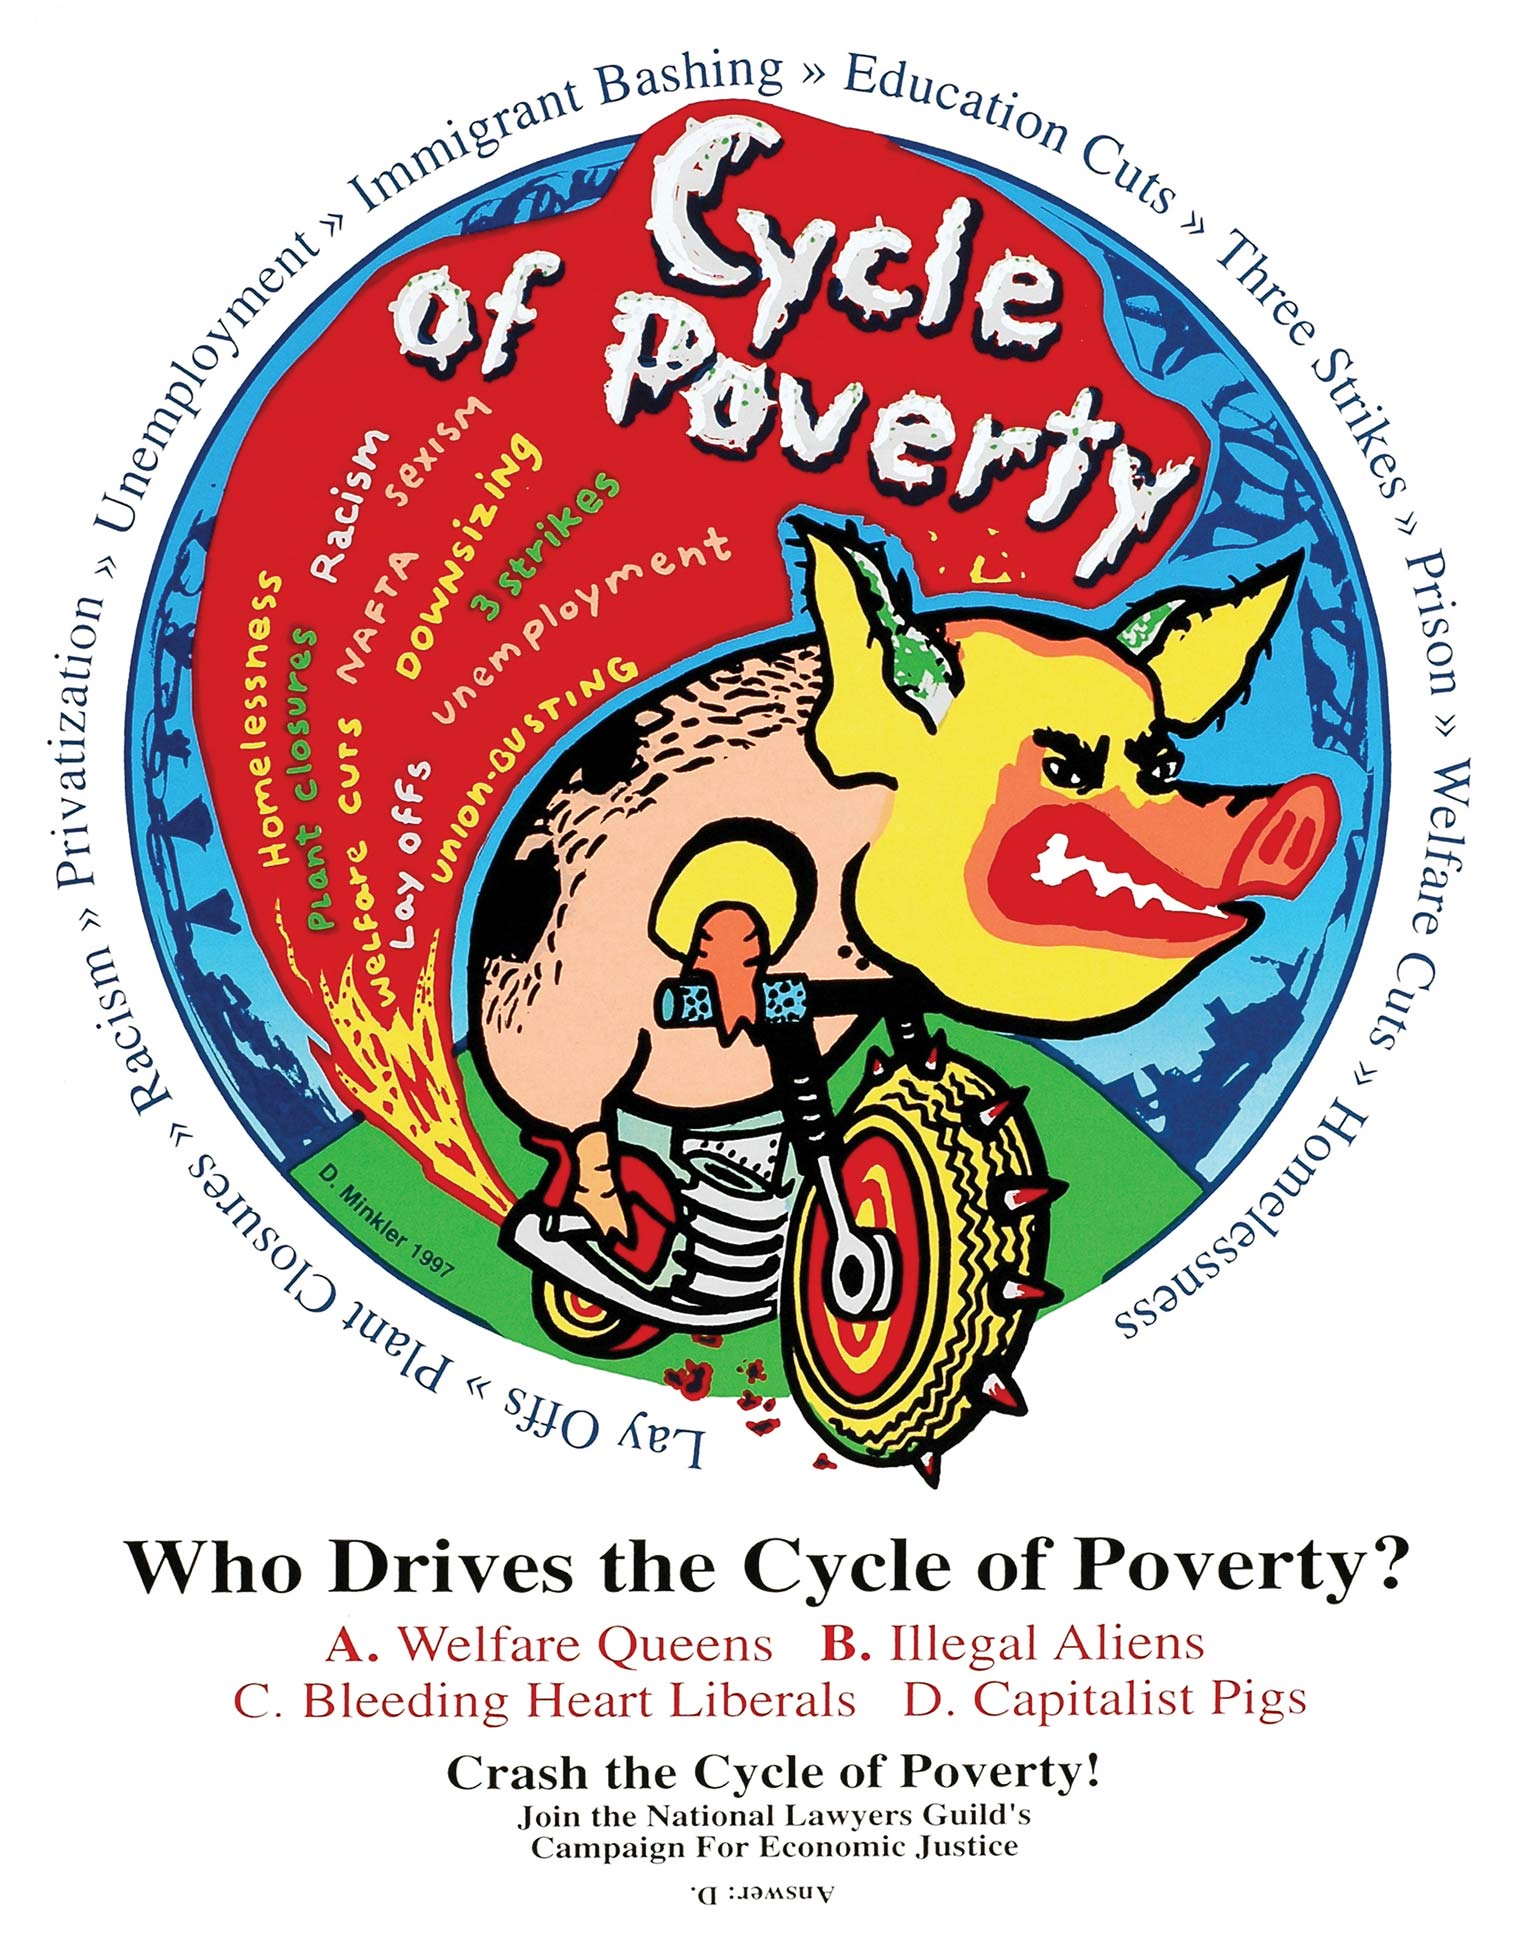 Douglas Minkler artwork Cycle of Poverty